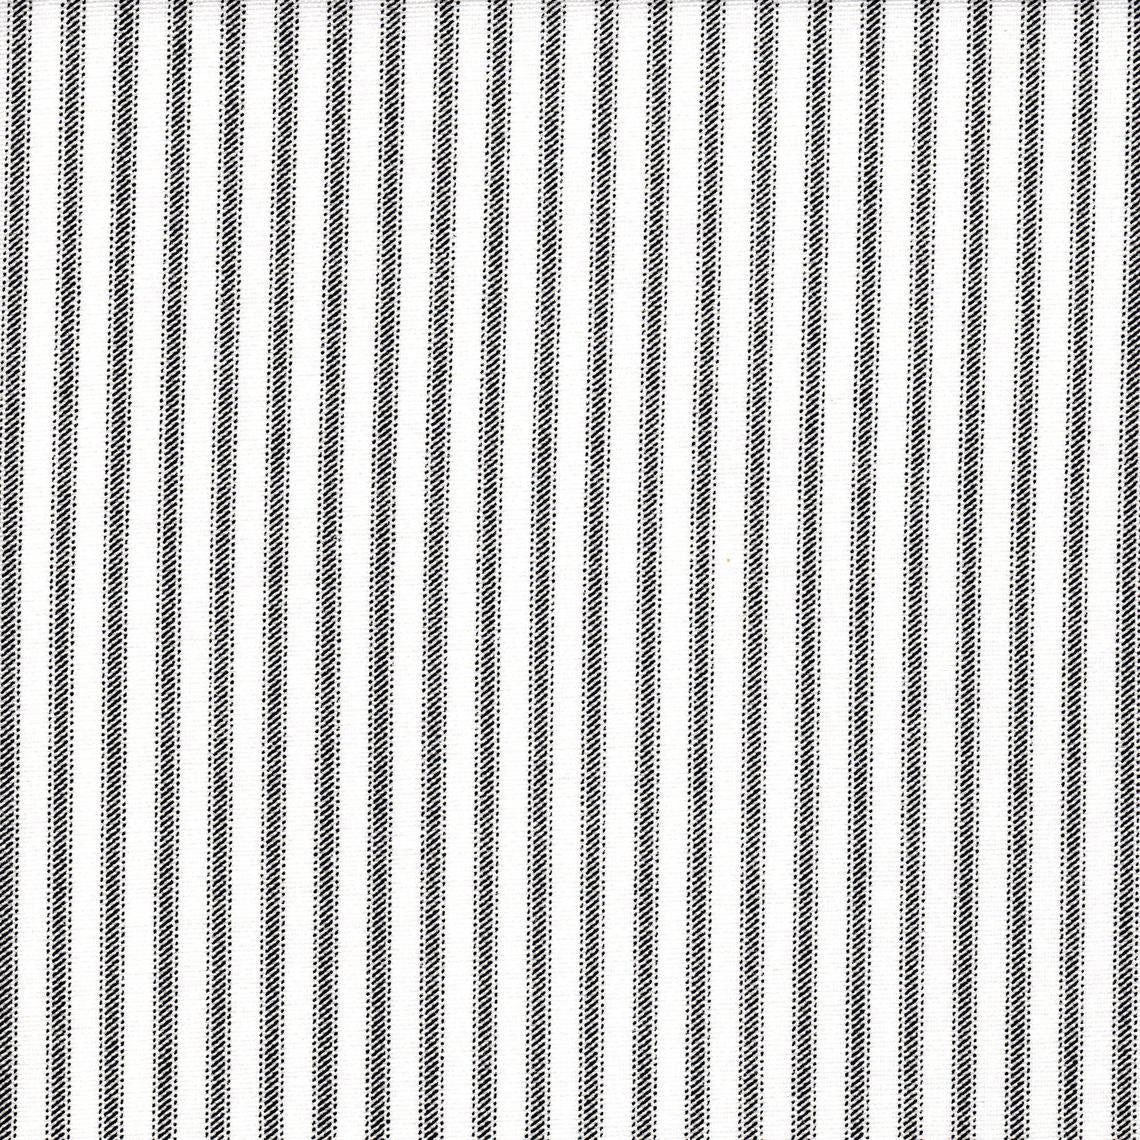 pillow sham in classic black ticking stripe on white